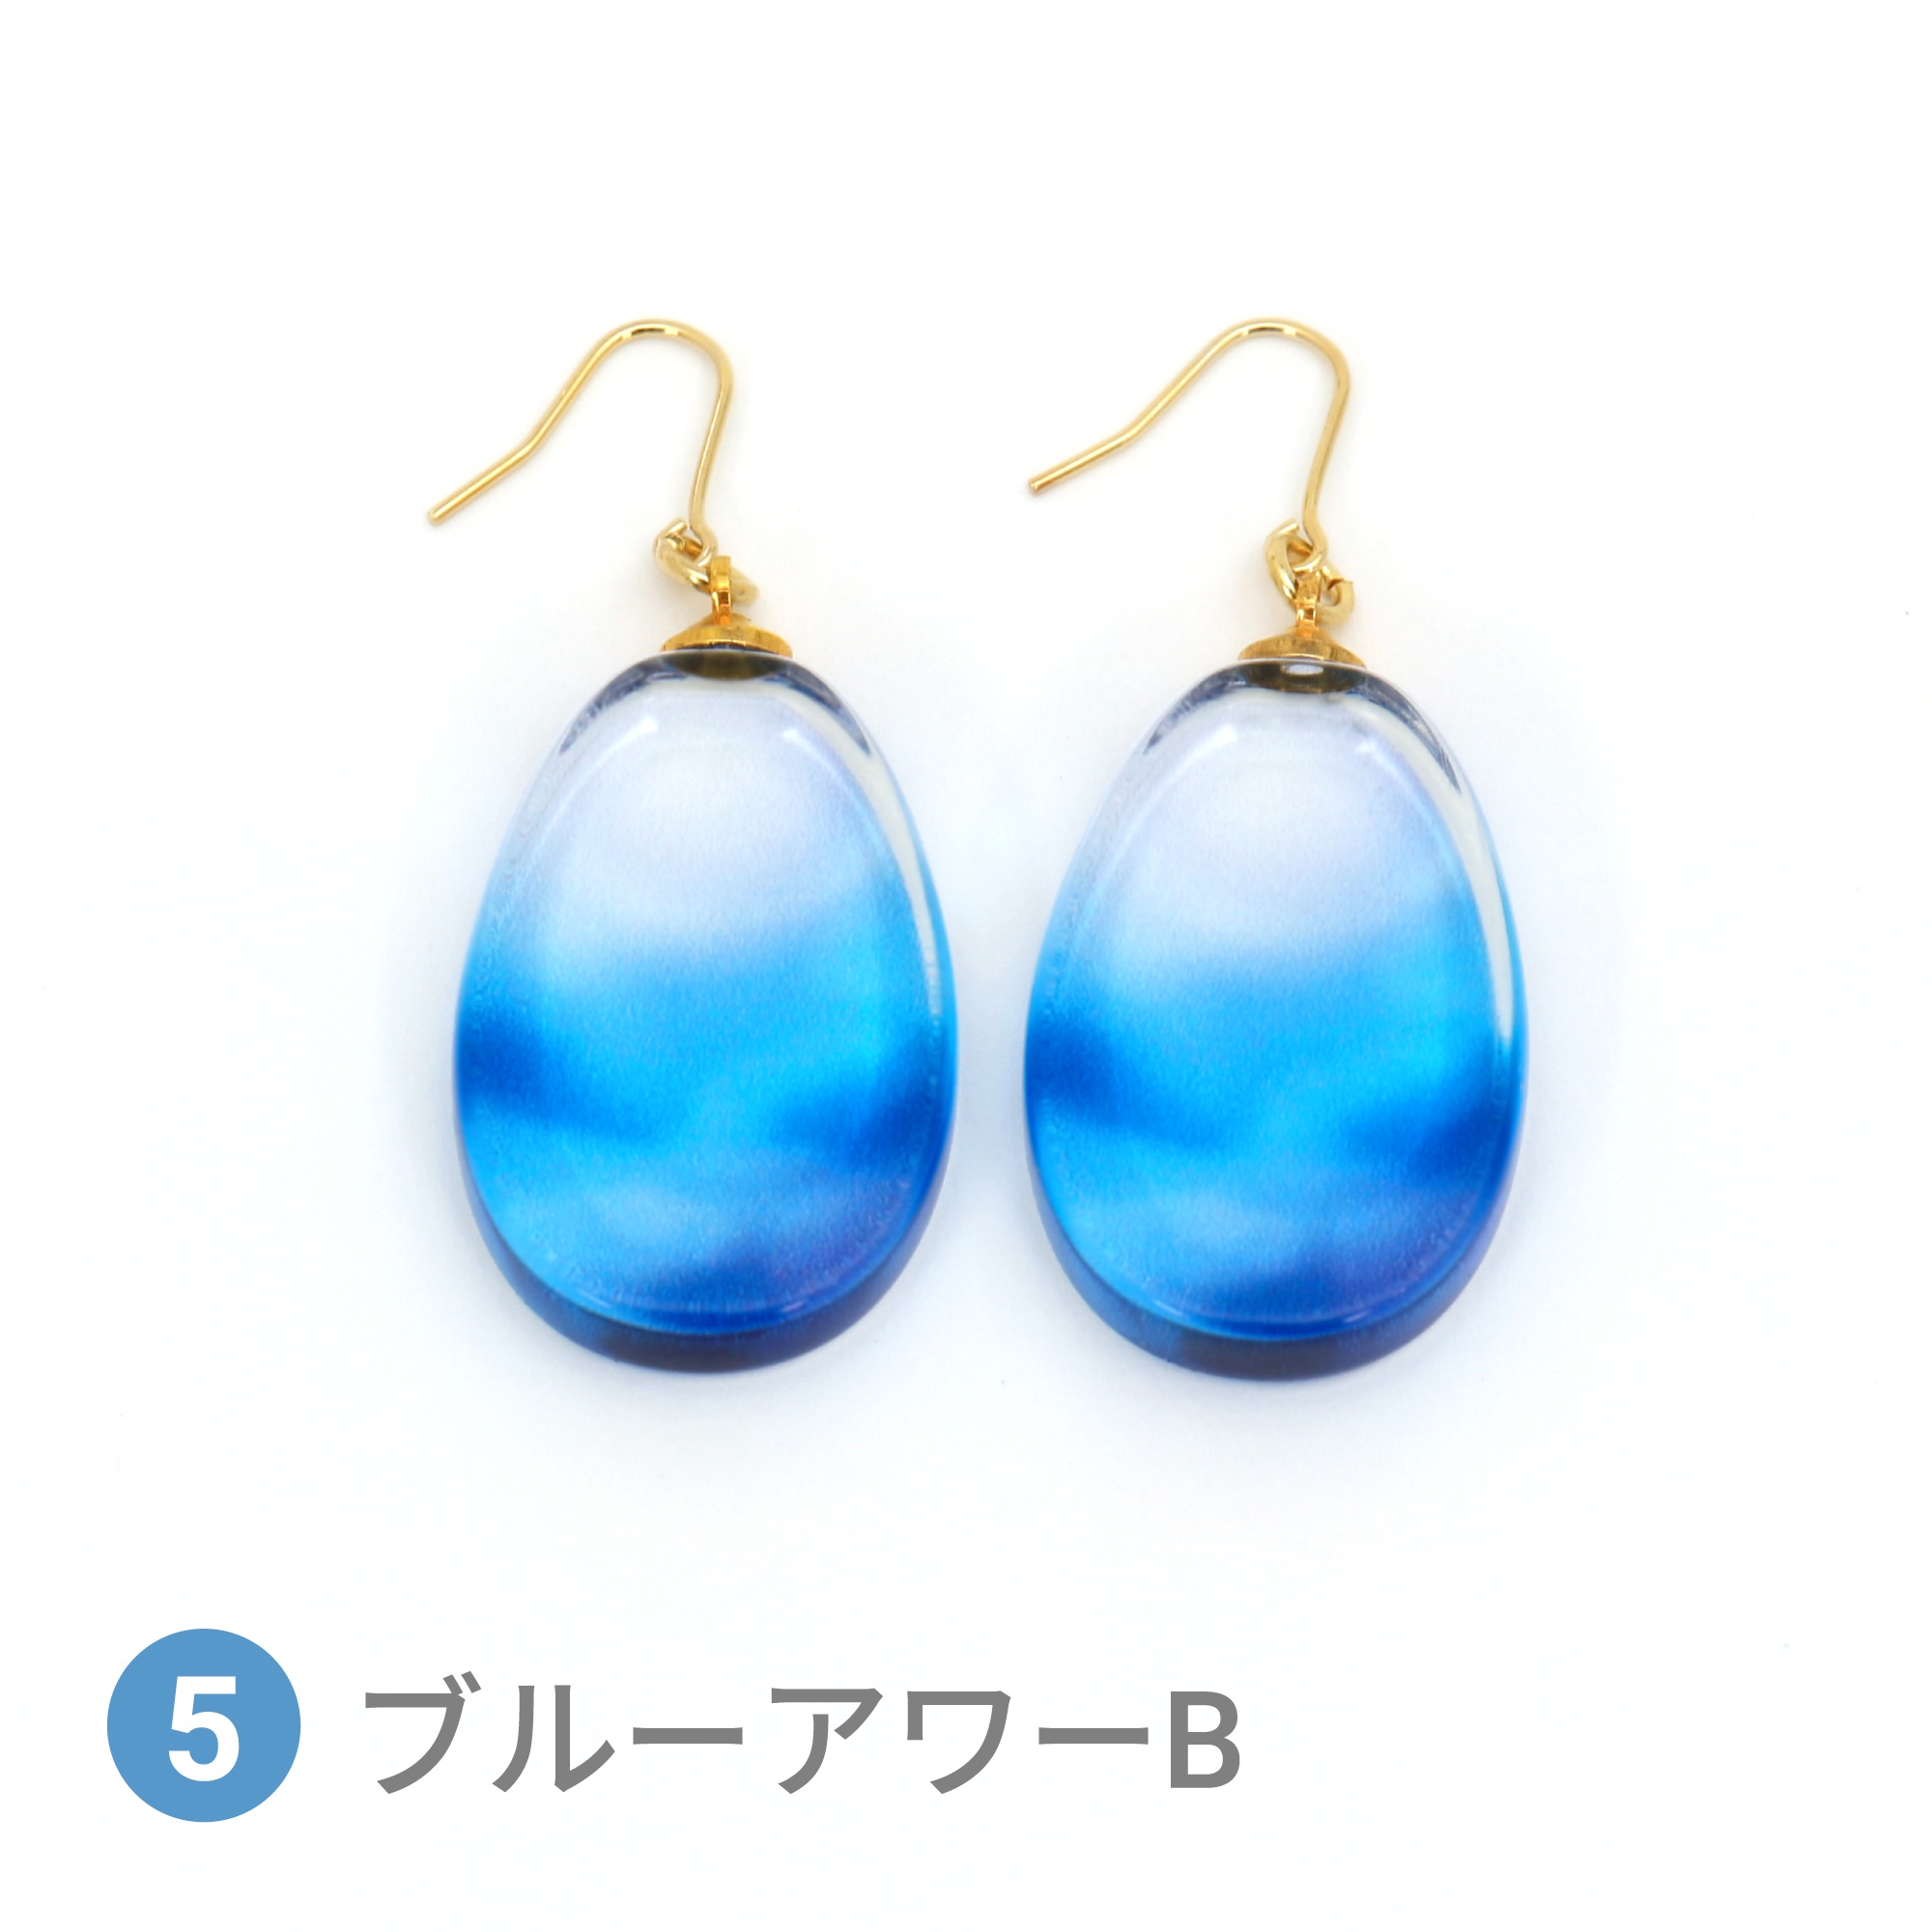 Glass accessories Pierced Earring SKY COLOR blue hour B drop shape